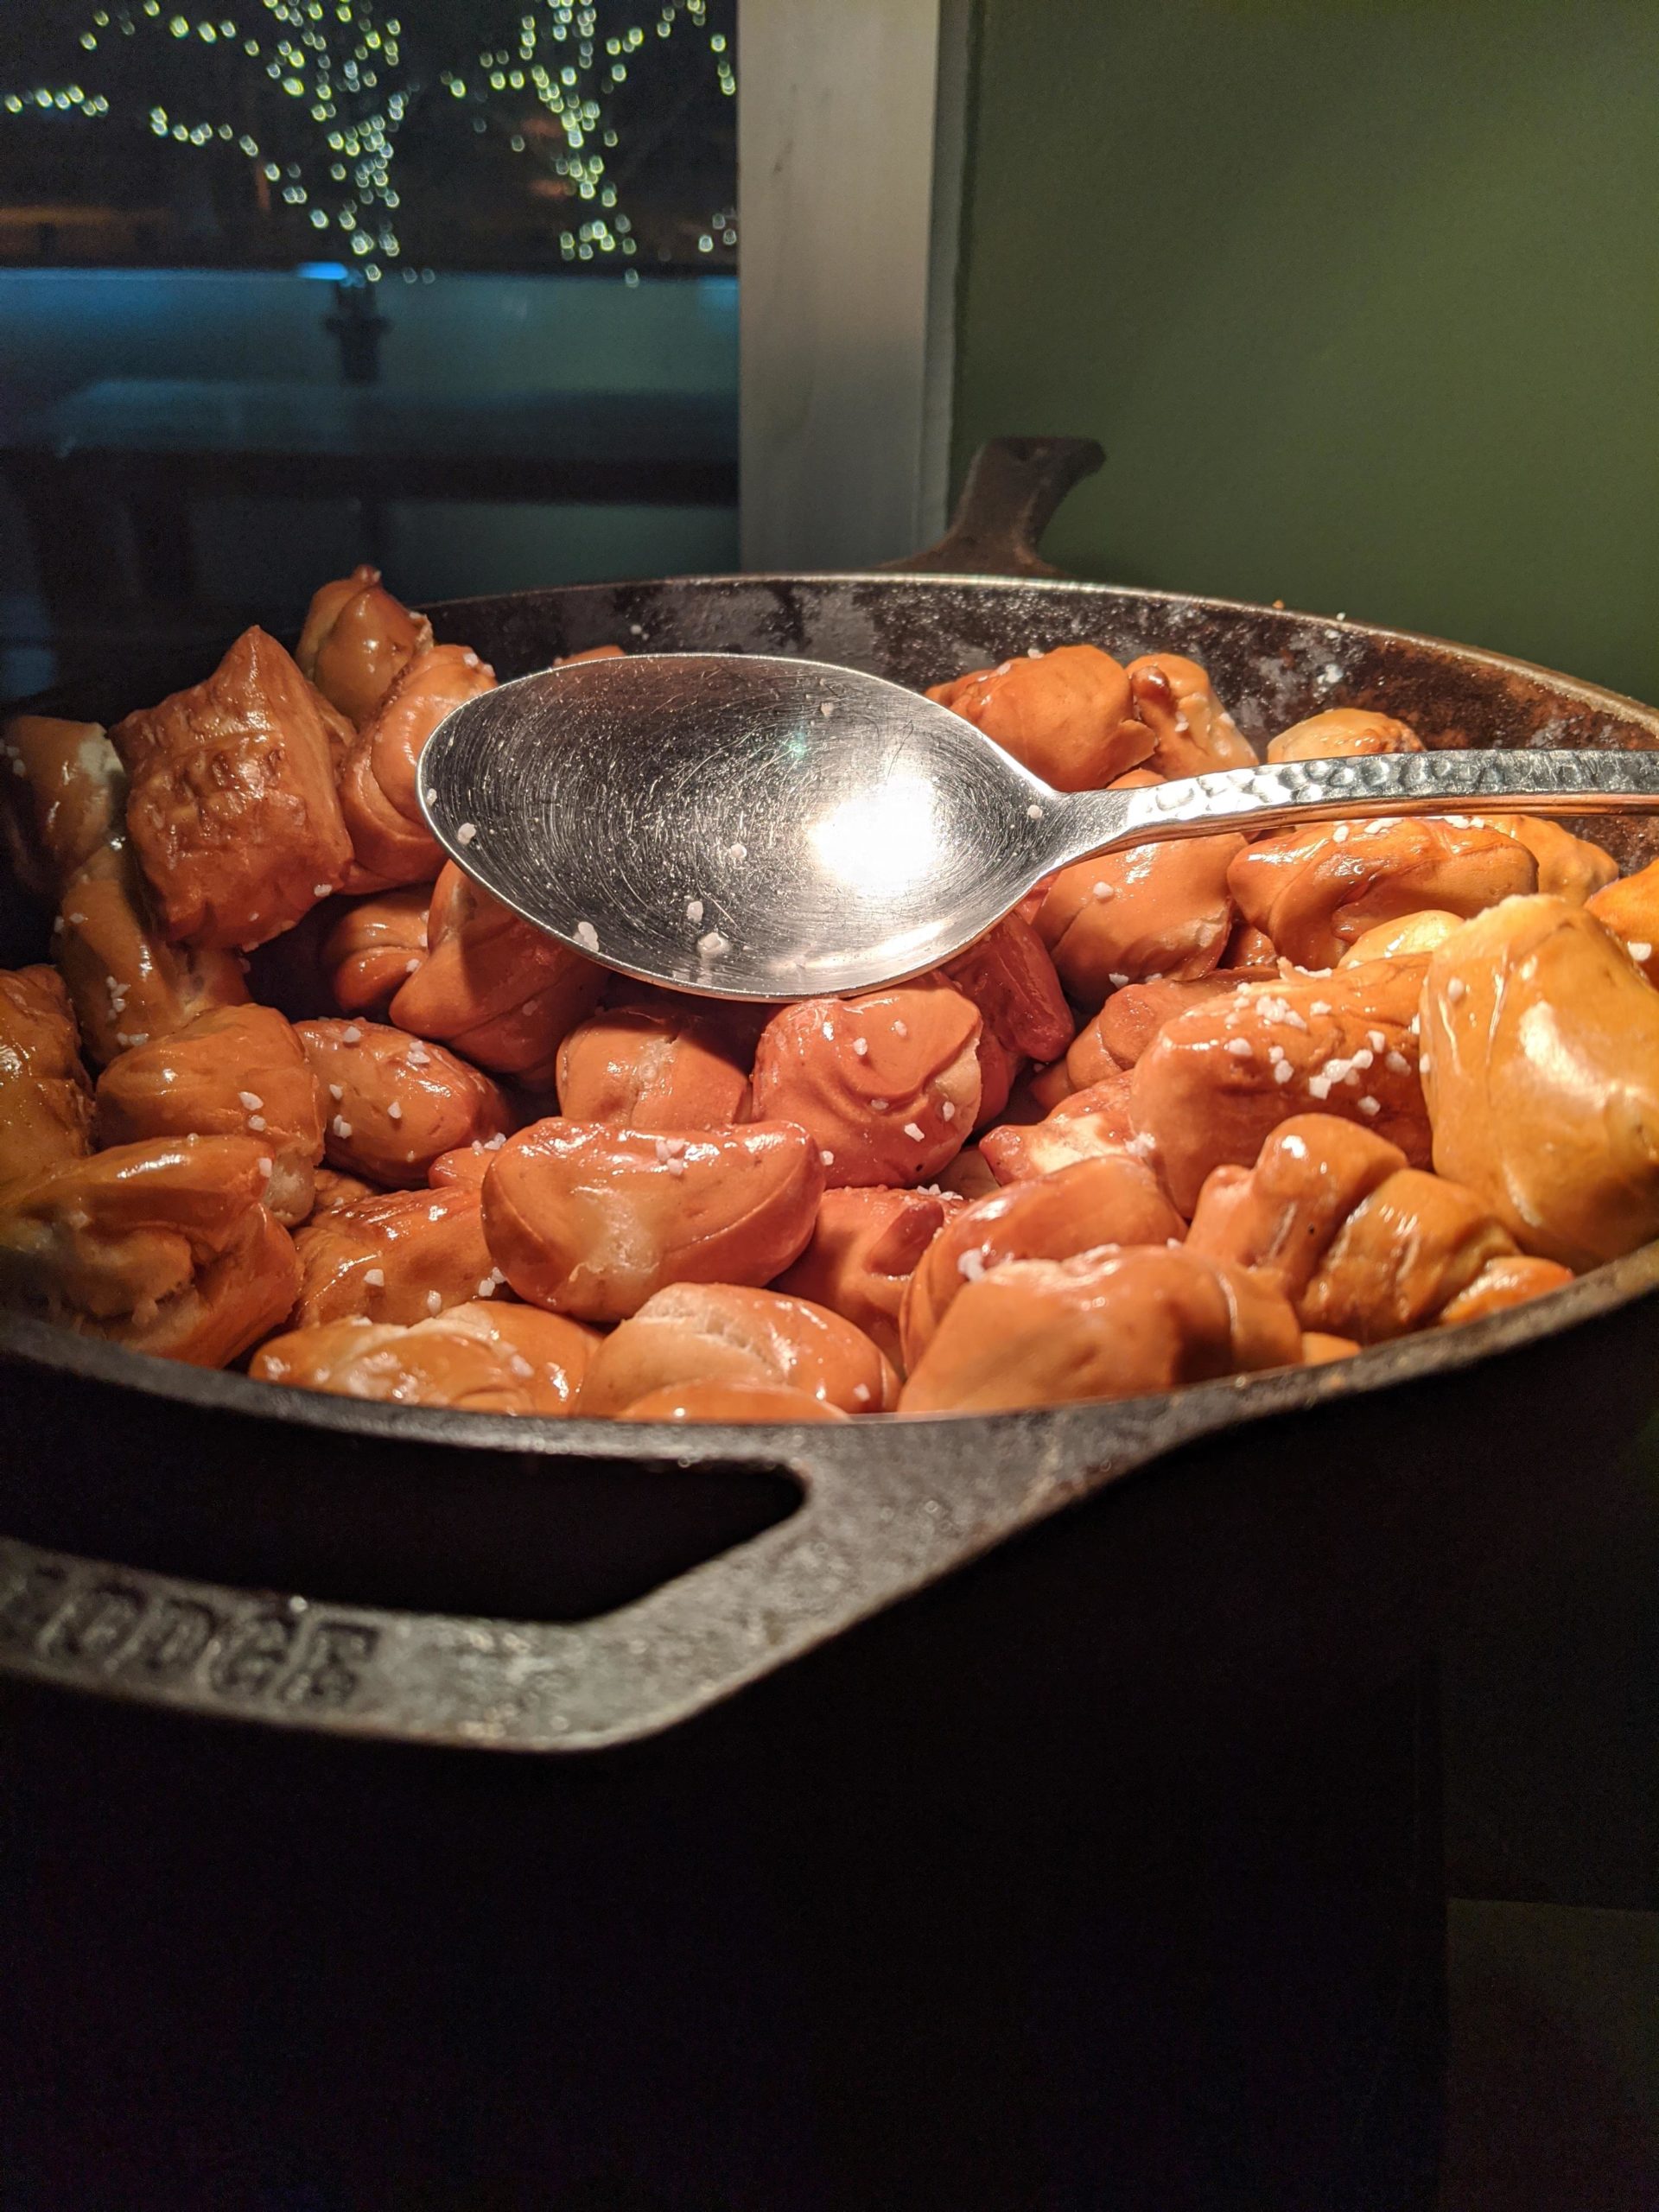 This bowl of pretzel bites caught our eye